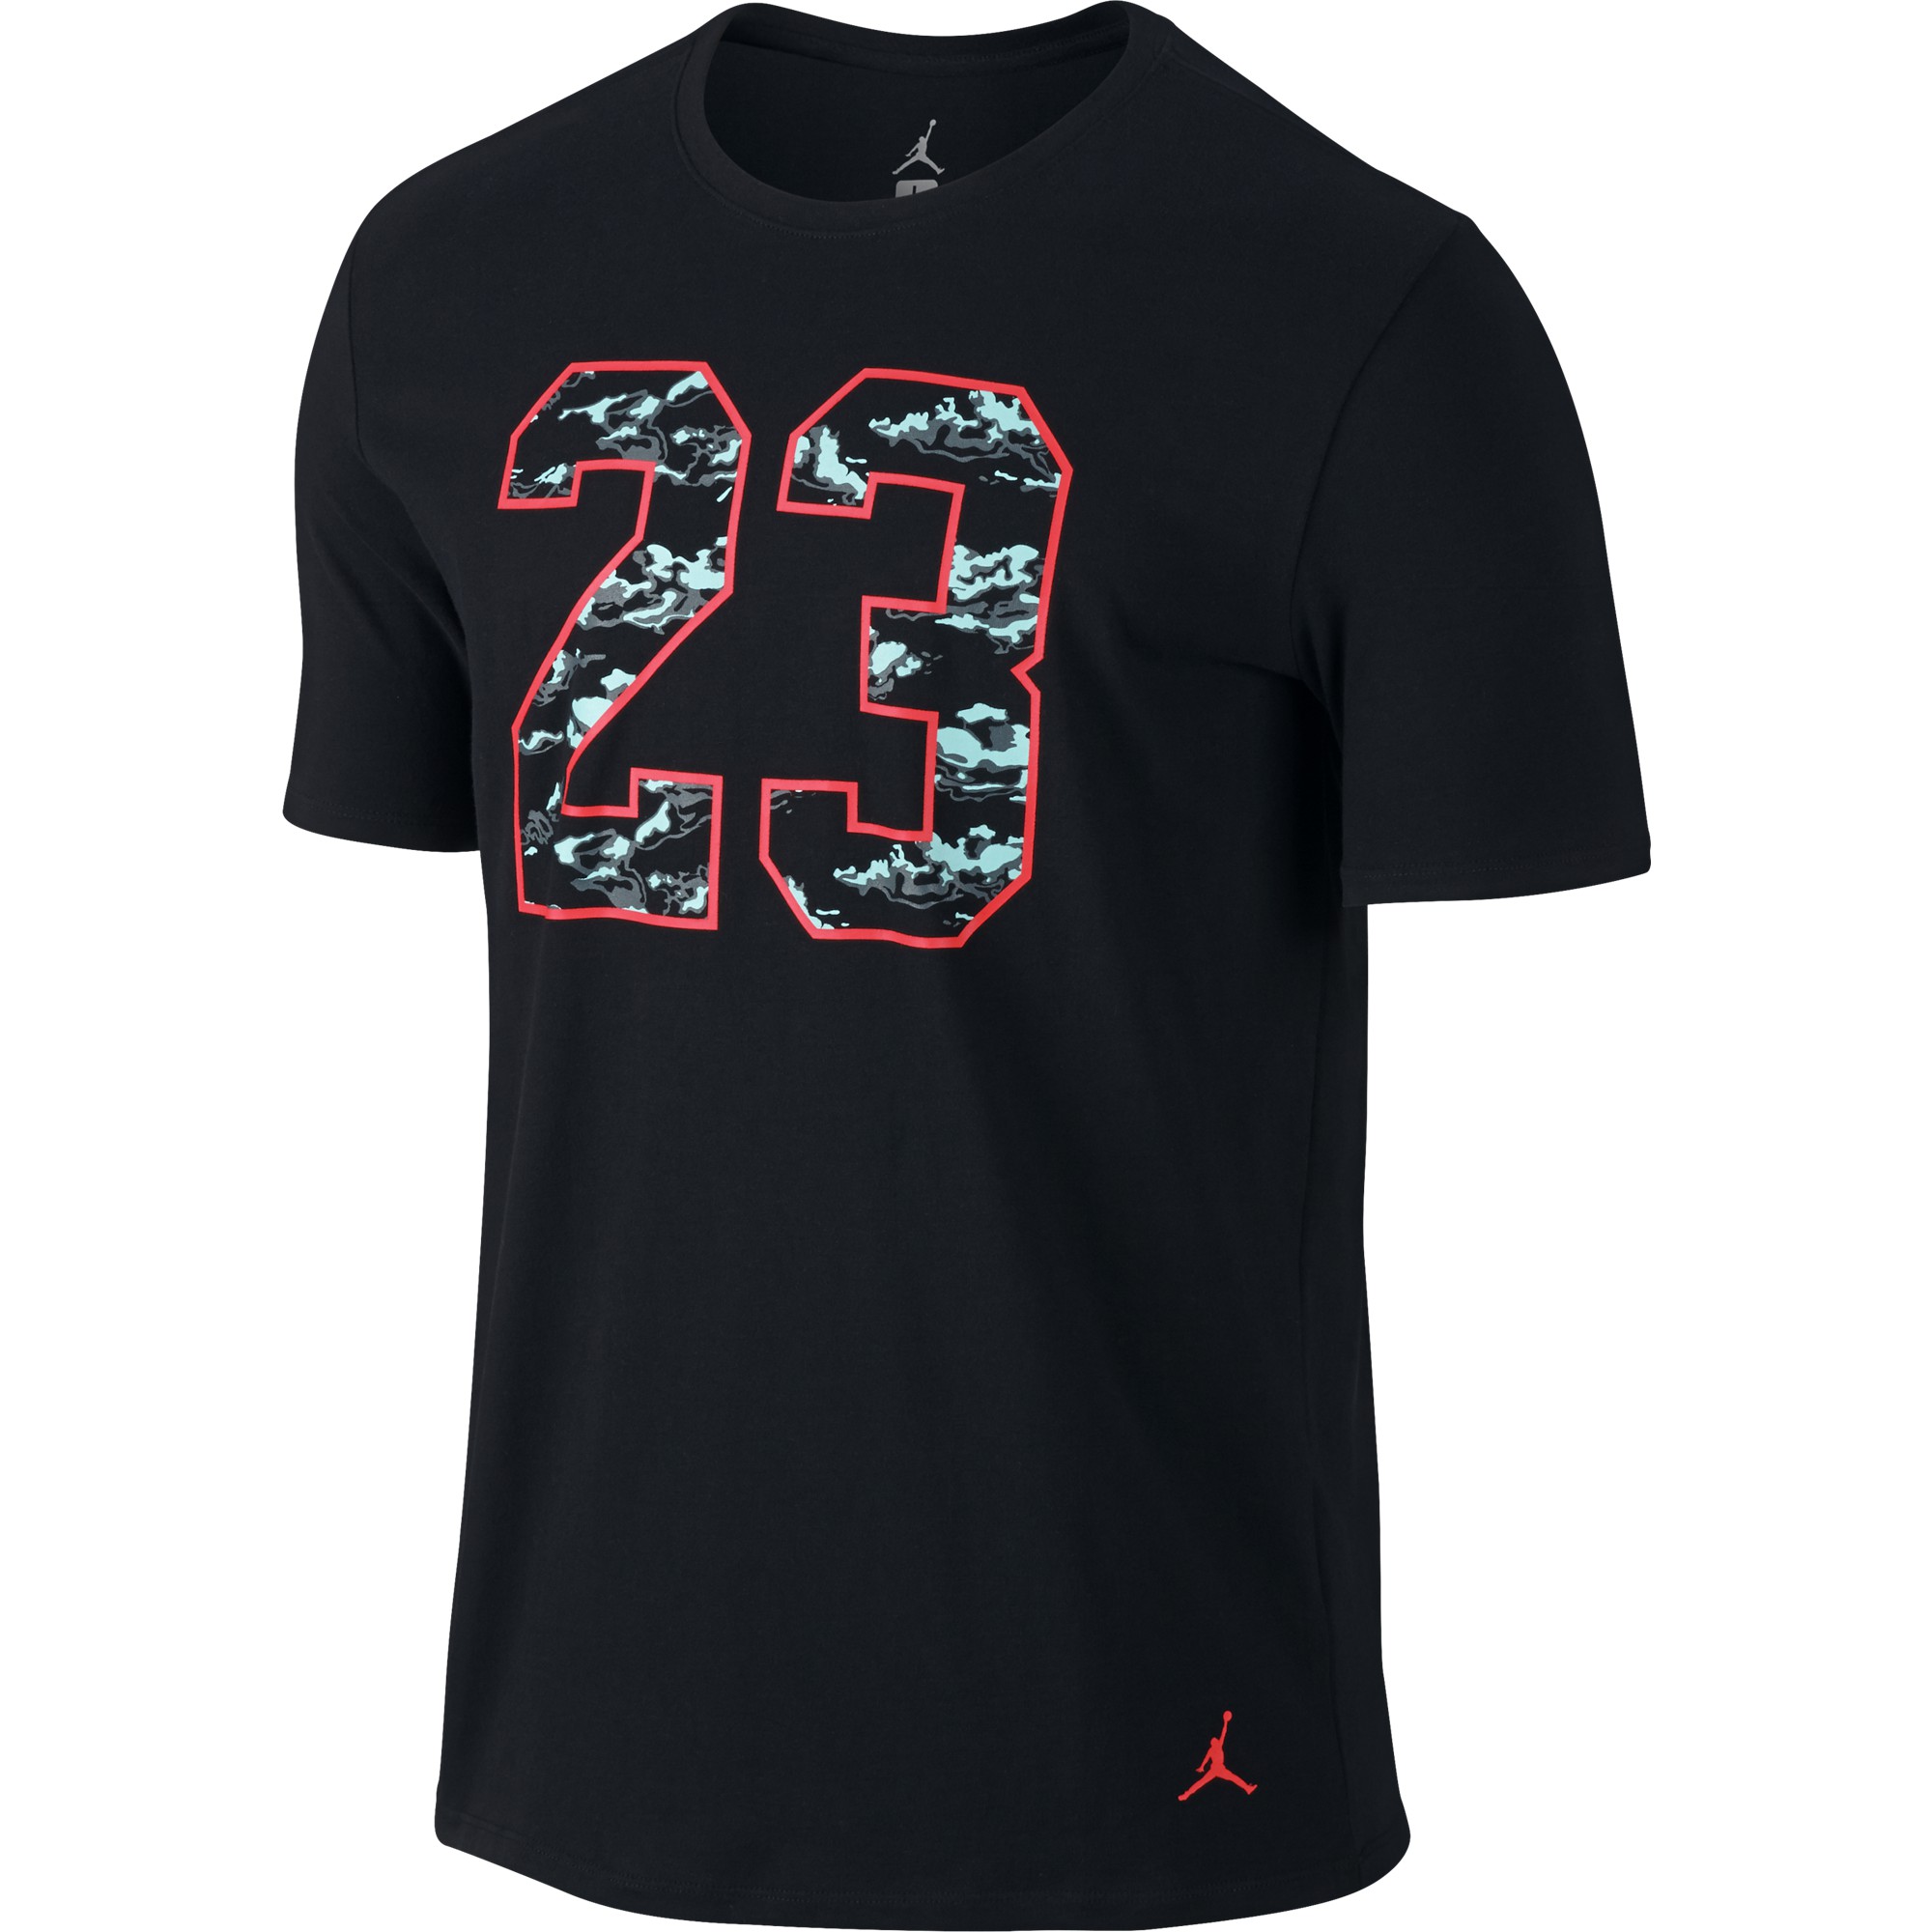 Nike Air Jordan 23 футболка